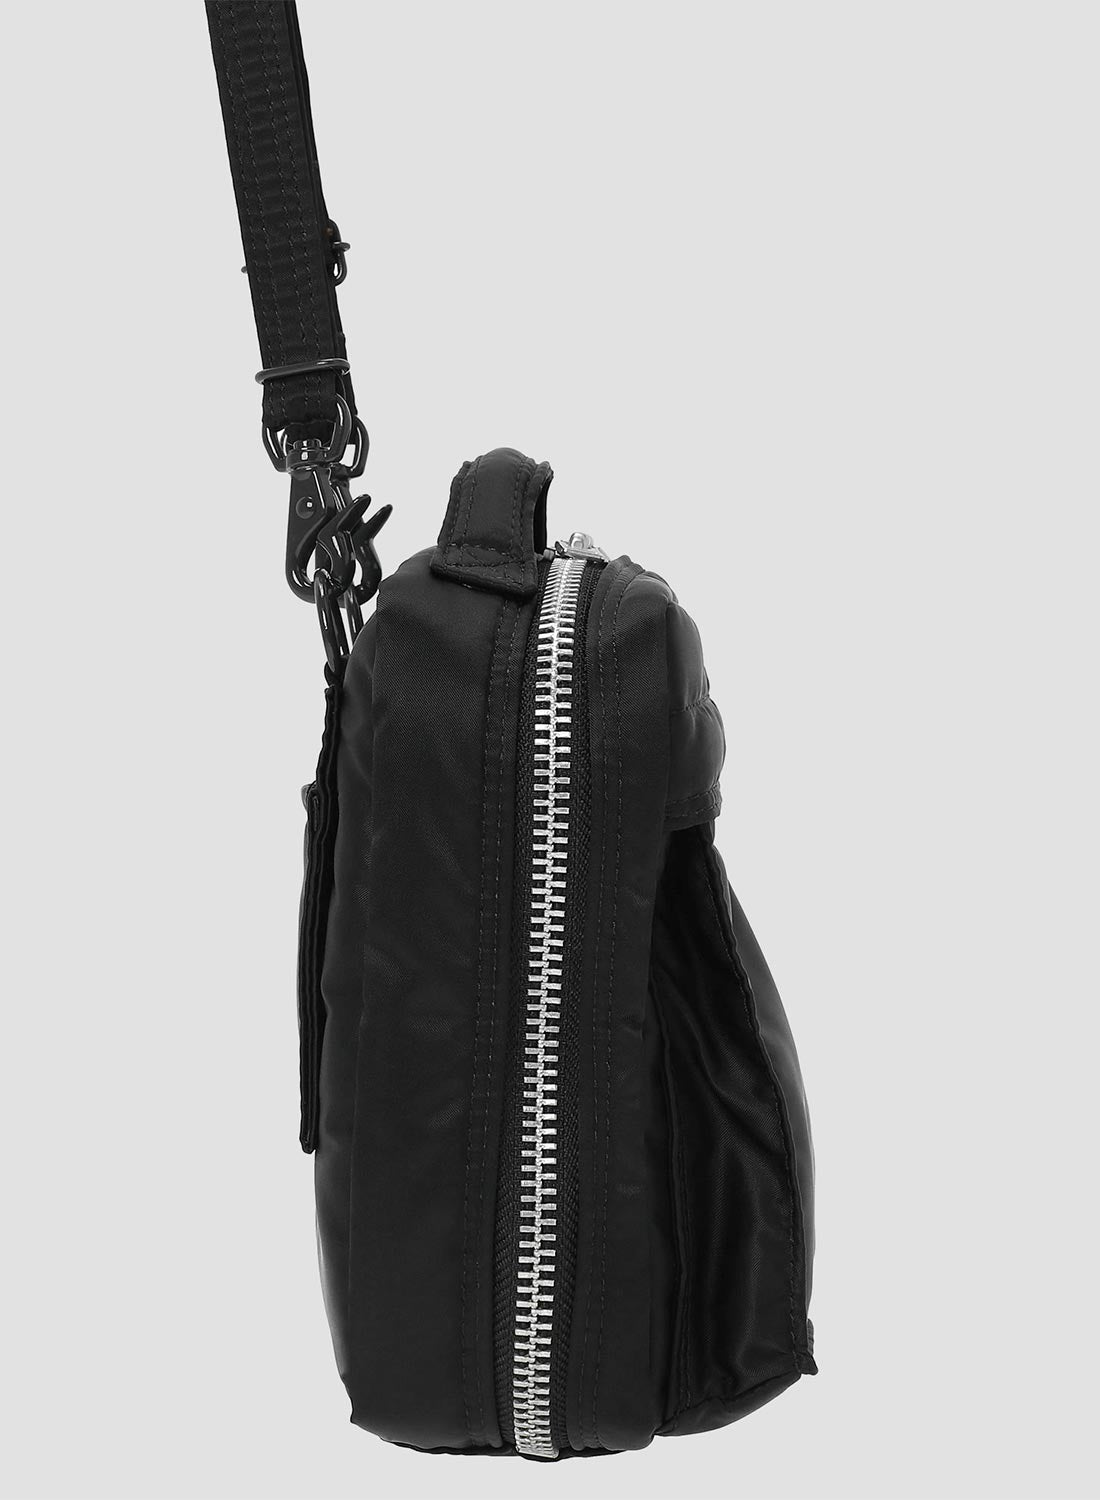 Porter-Yoshida & Co Tanker Waist Bag in Black – Nigel Cabourn